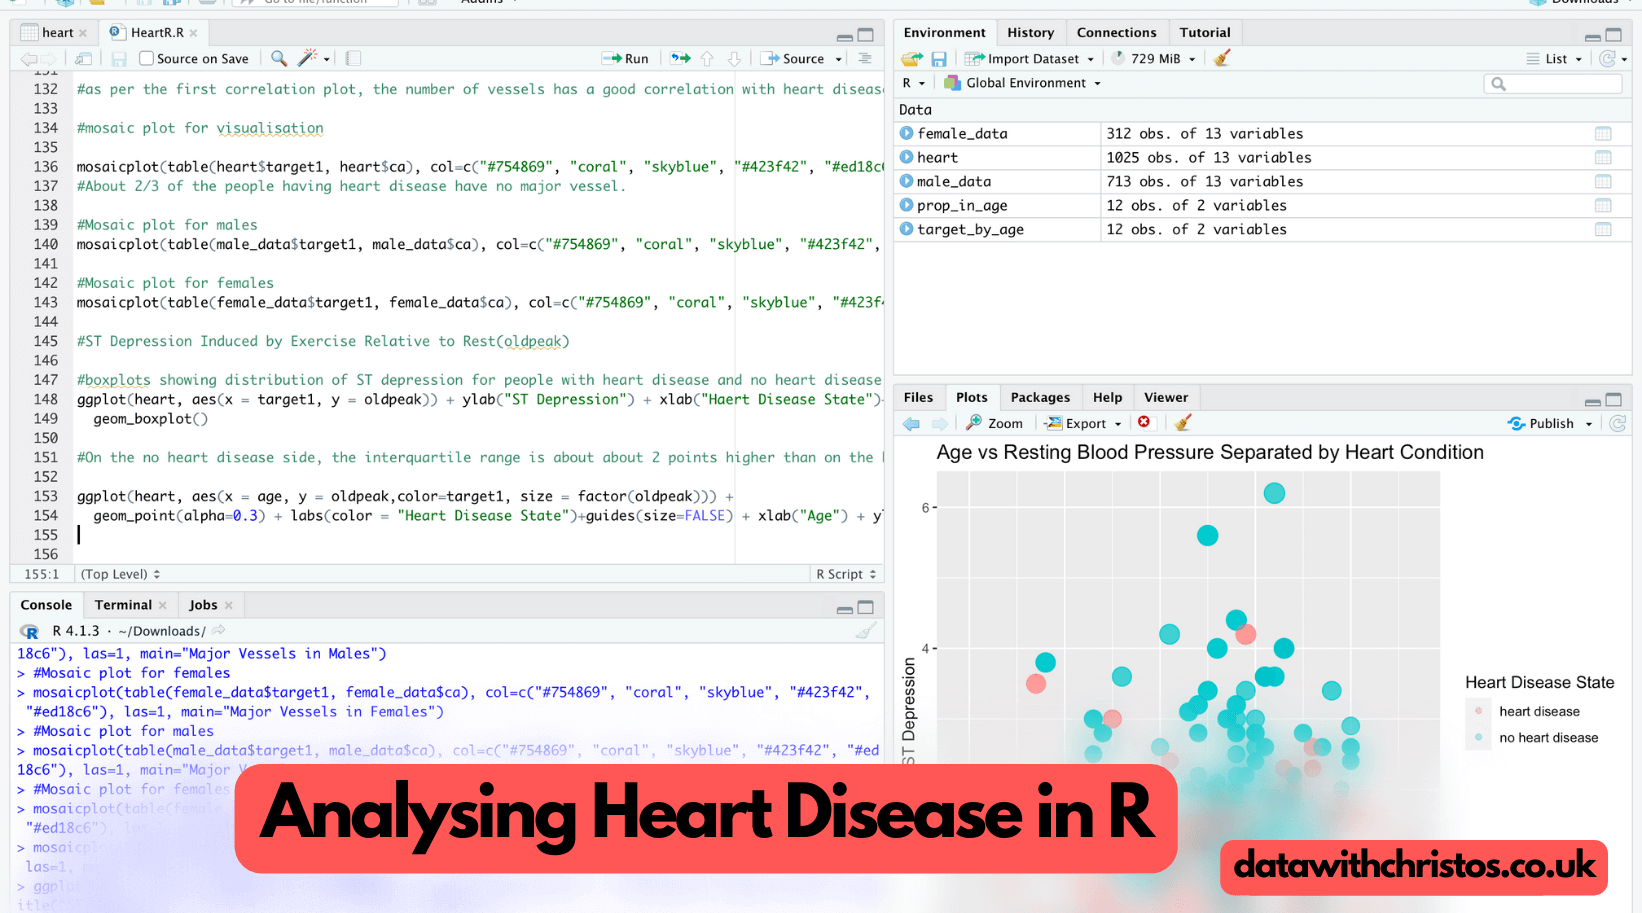 Analysing Heart Disease Data in R